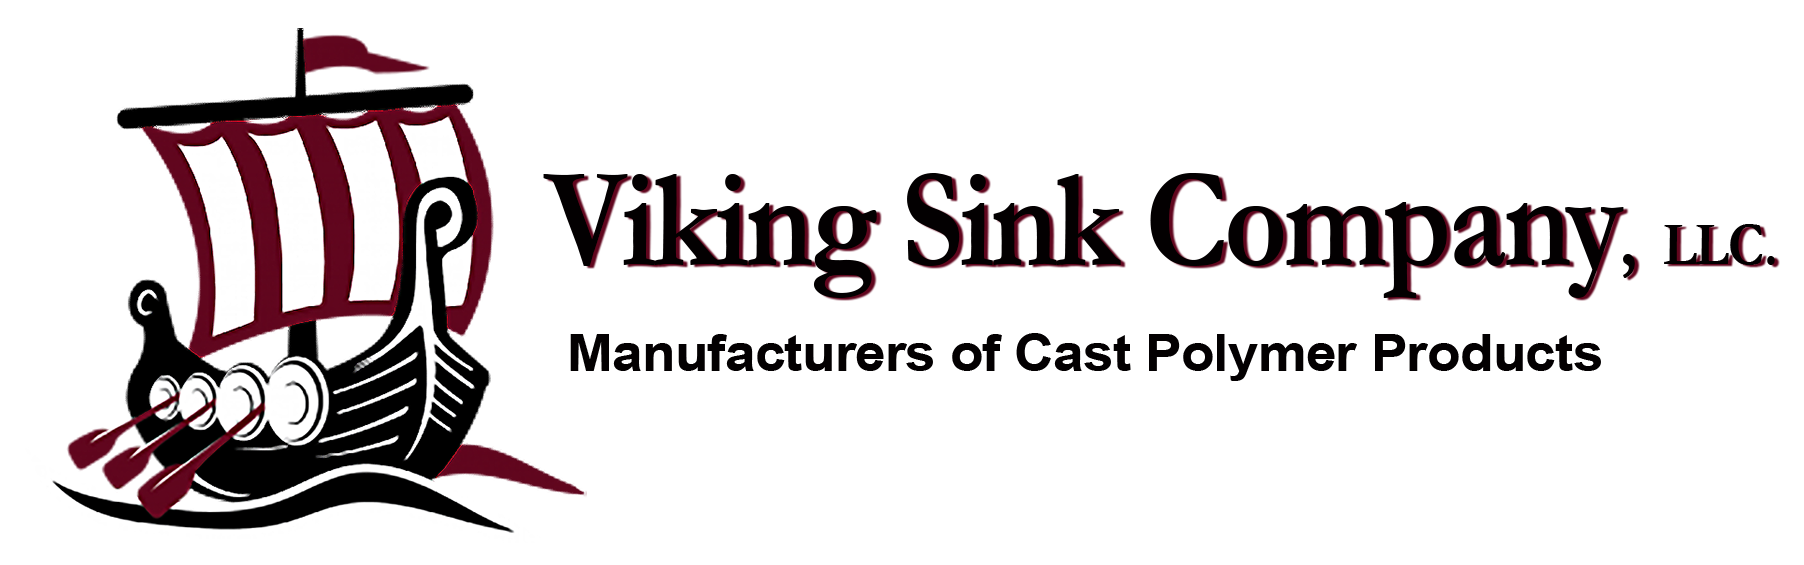 Viking Sink Company